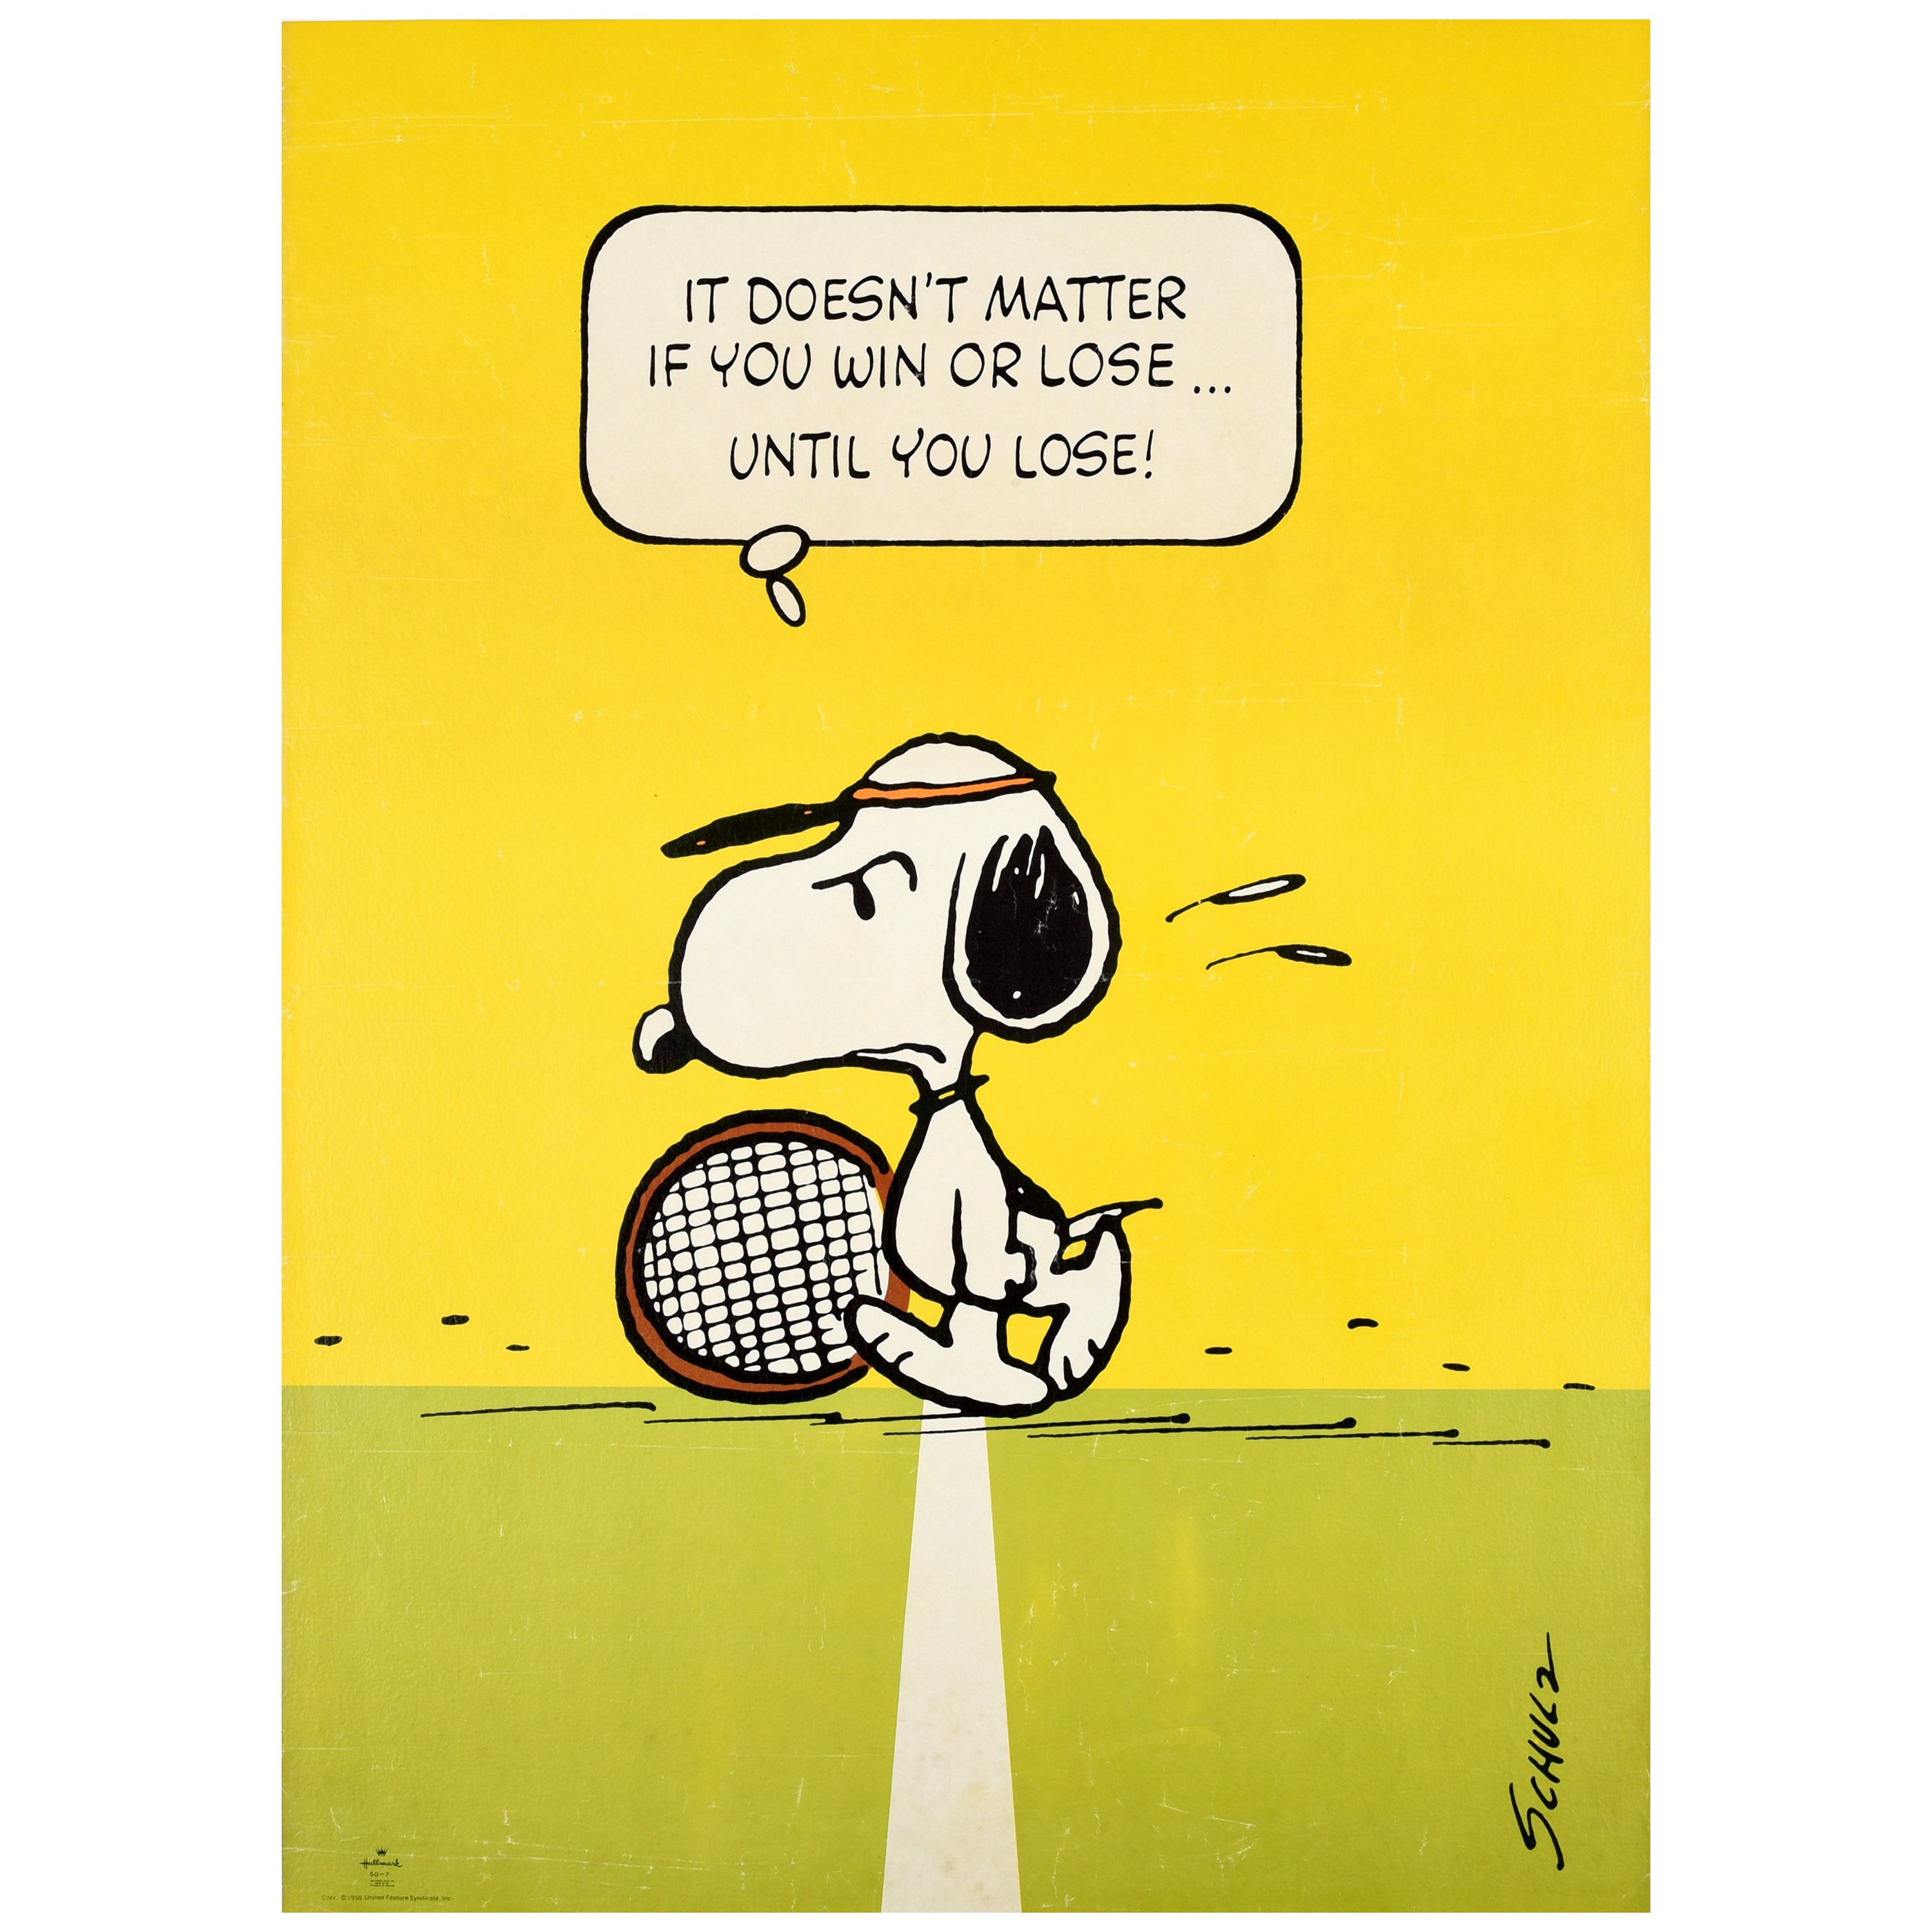 Original Vintage Poster Snoopy Tennis Win Lose Charles M Schulz Peanuts Cartoon